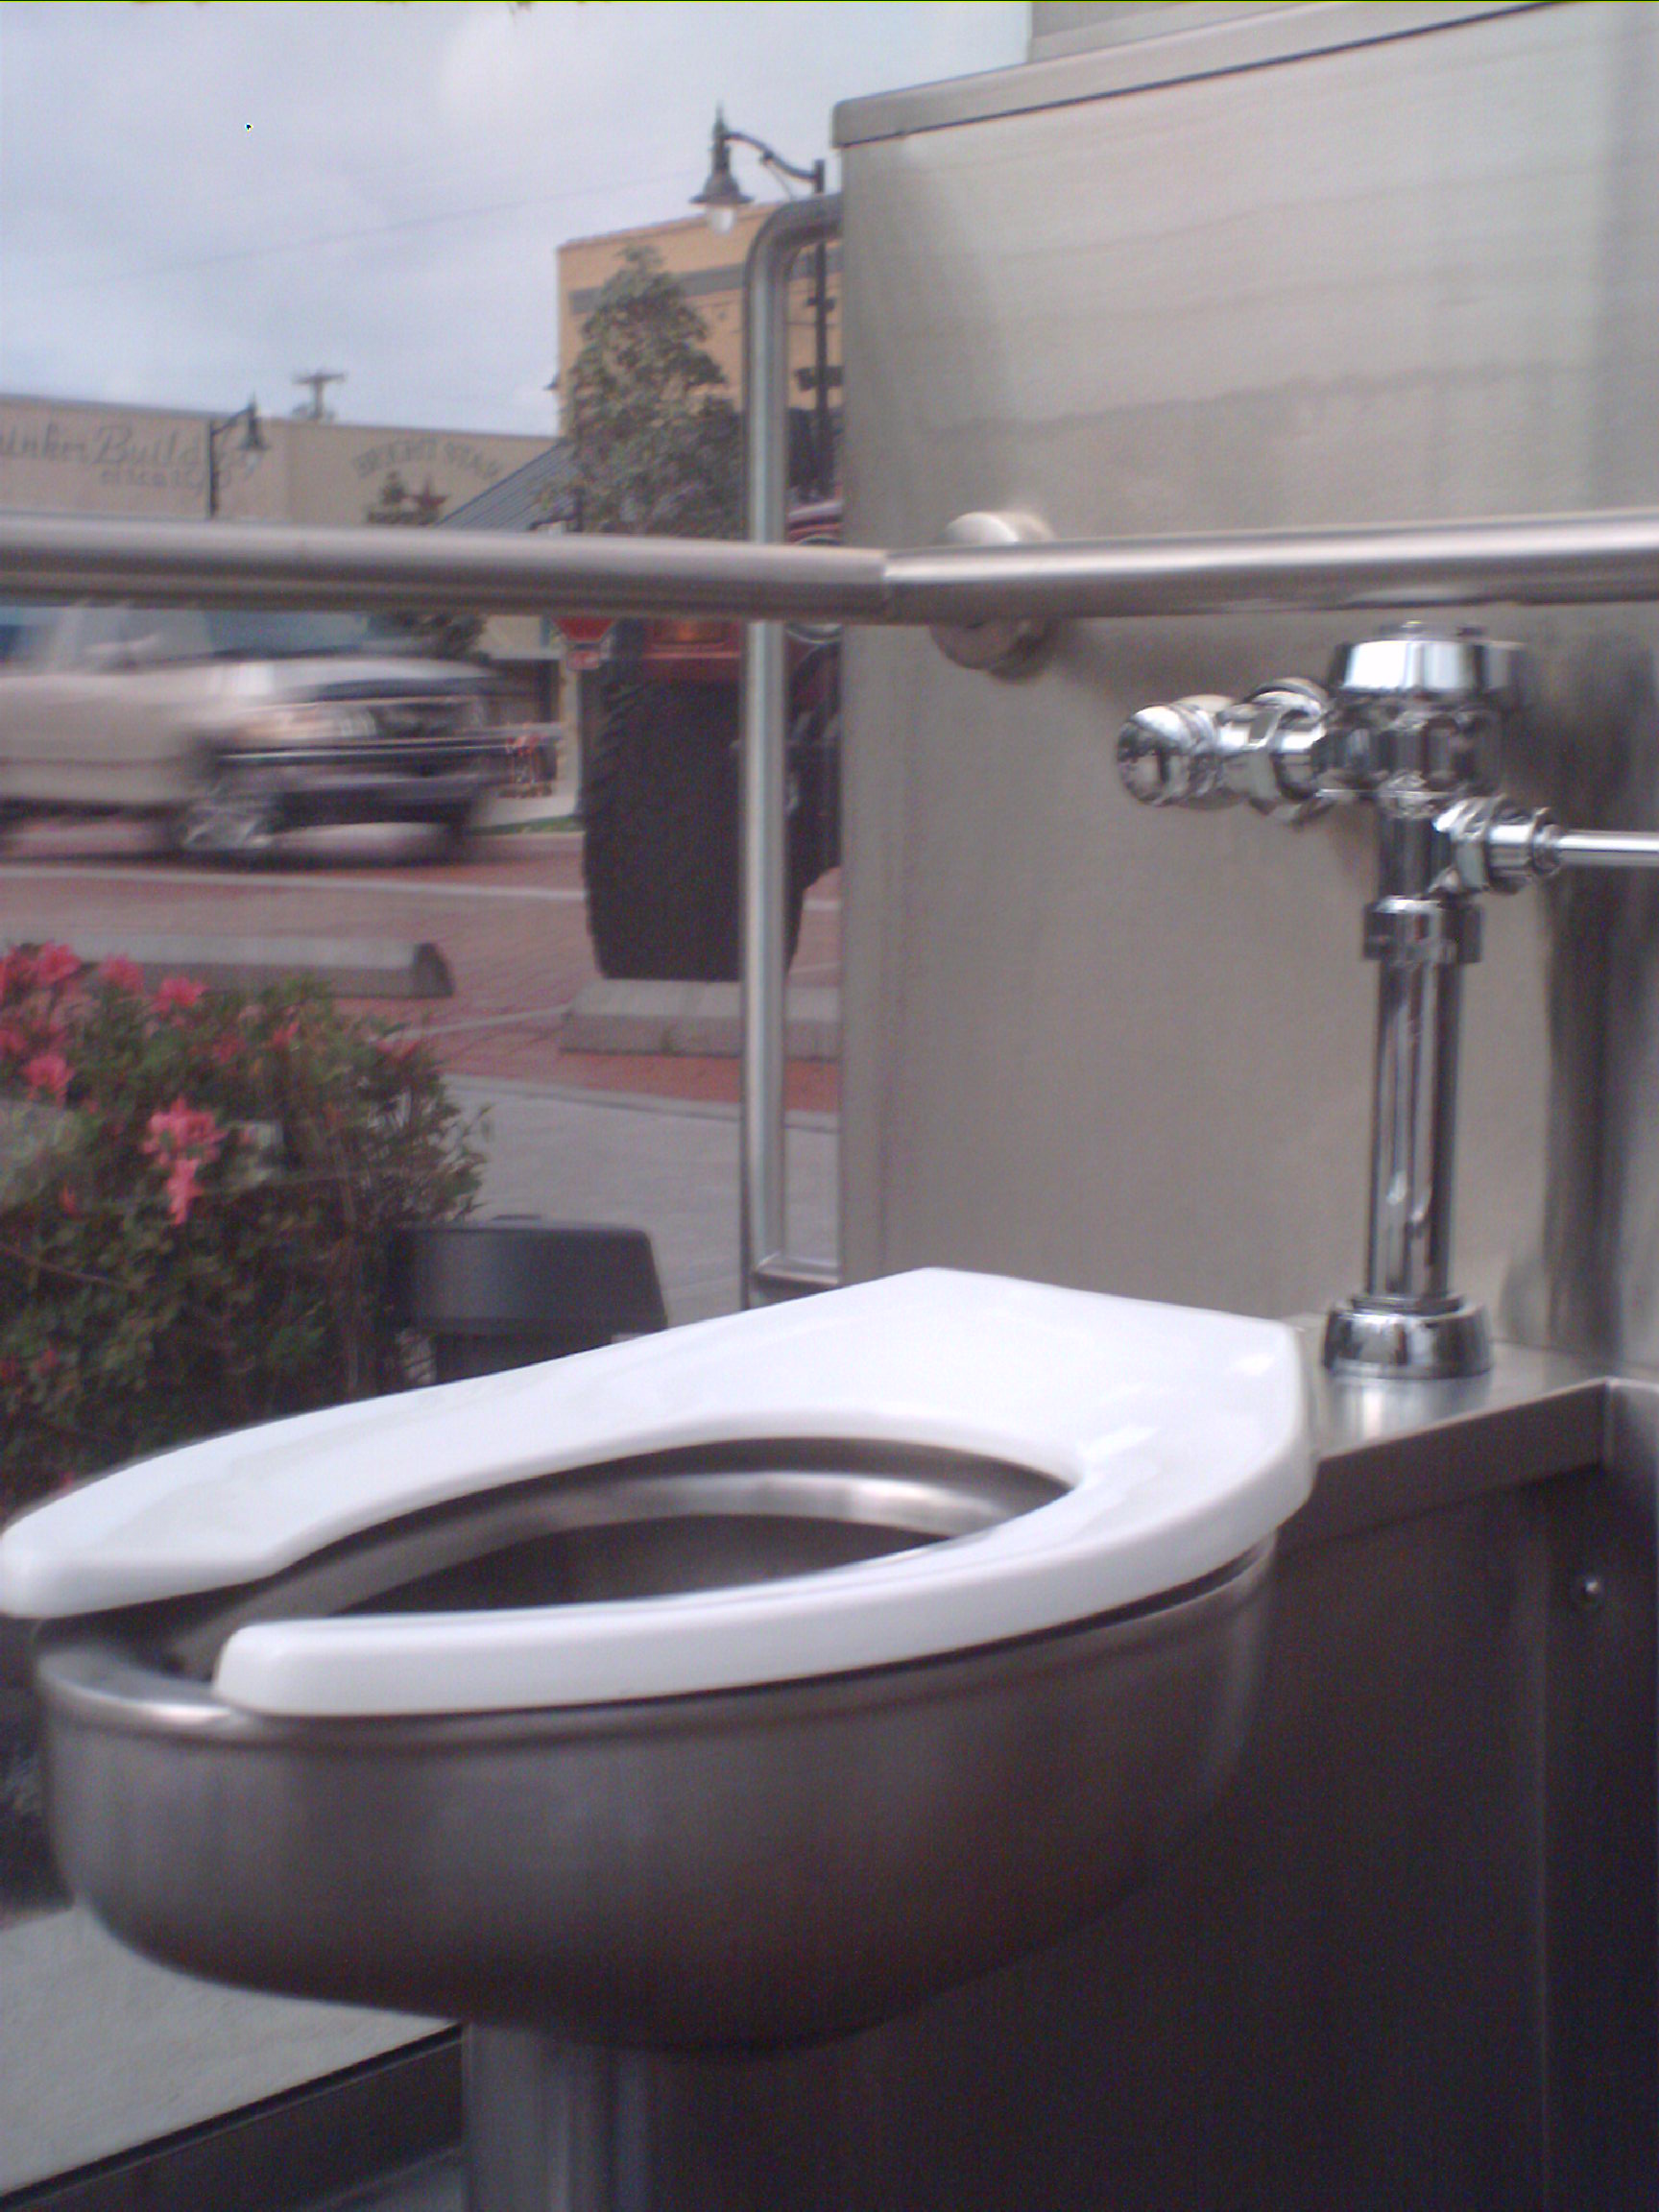 glass-bathrooms-sulphur-springs-texas-world-famous-public-restrooms